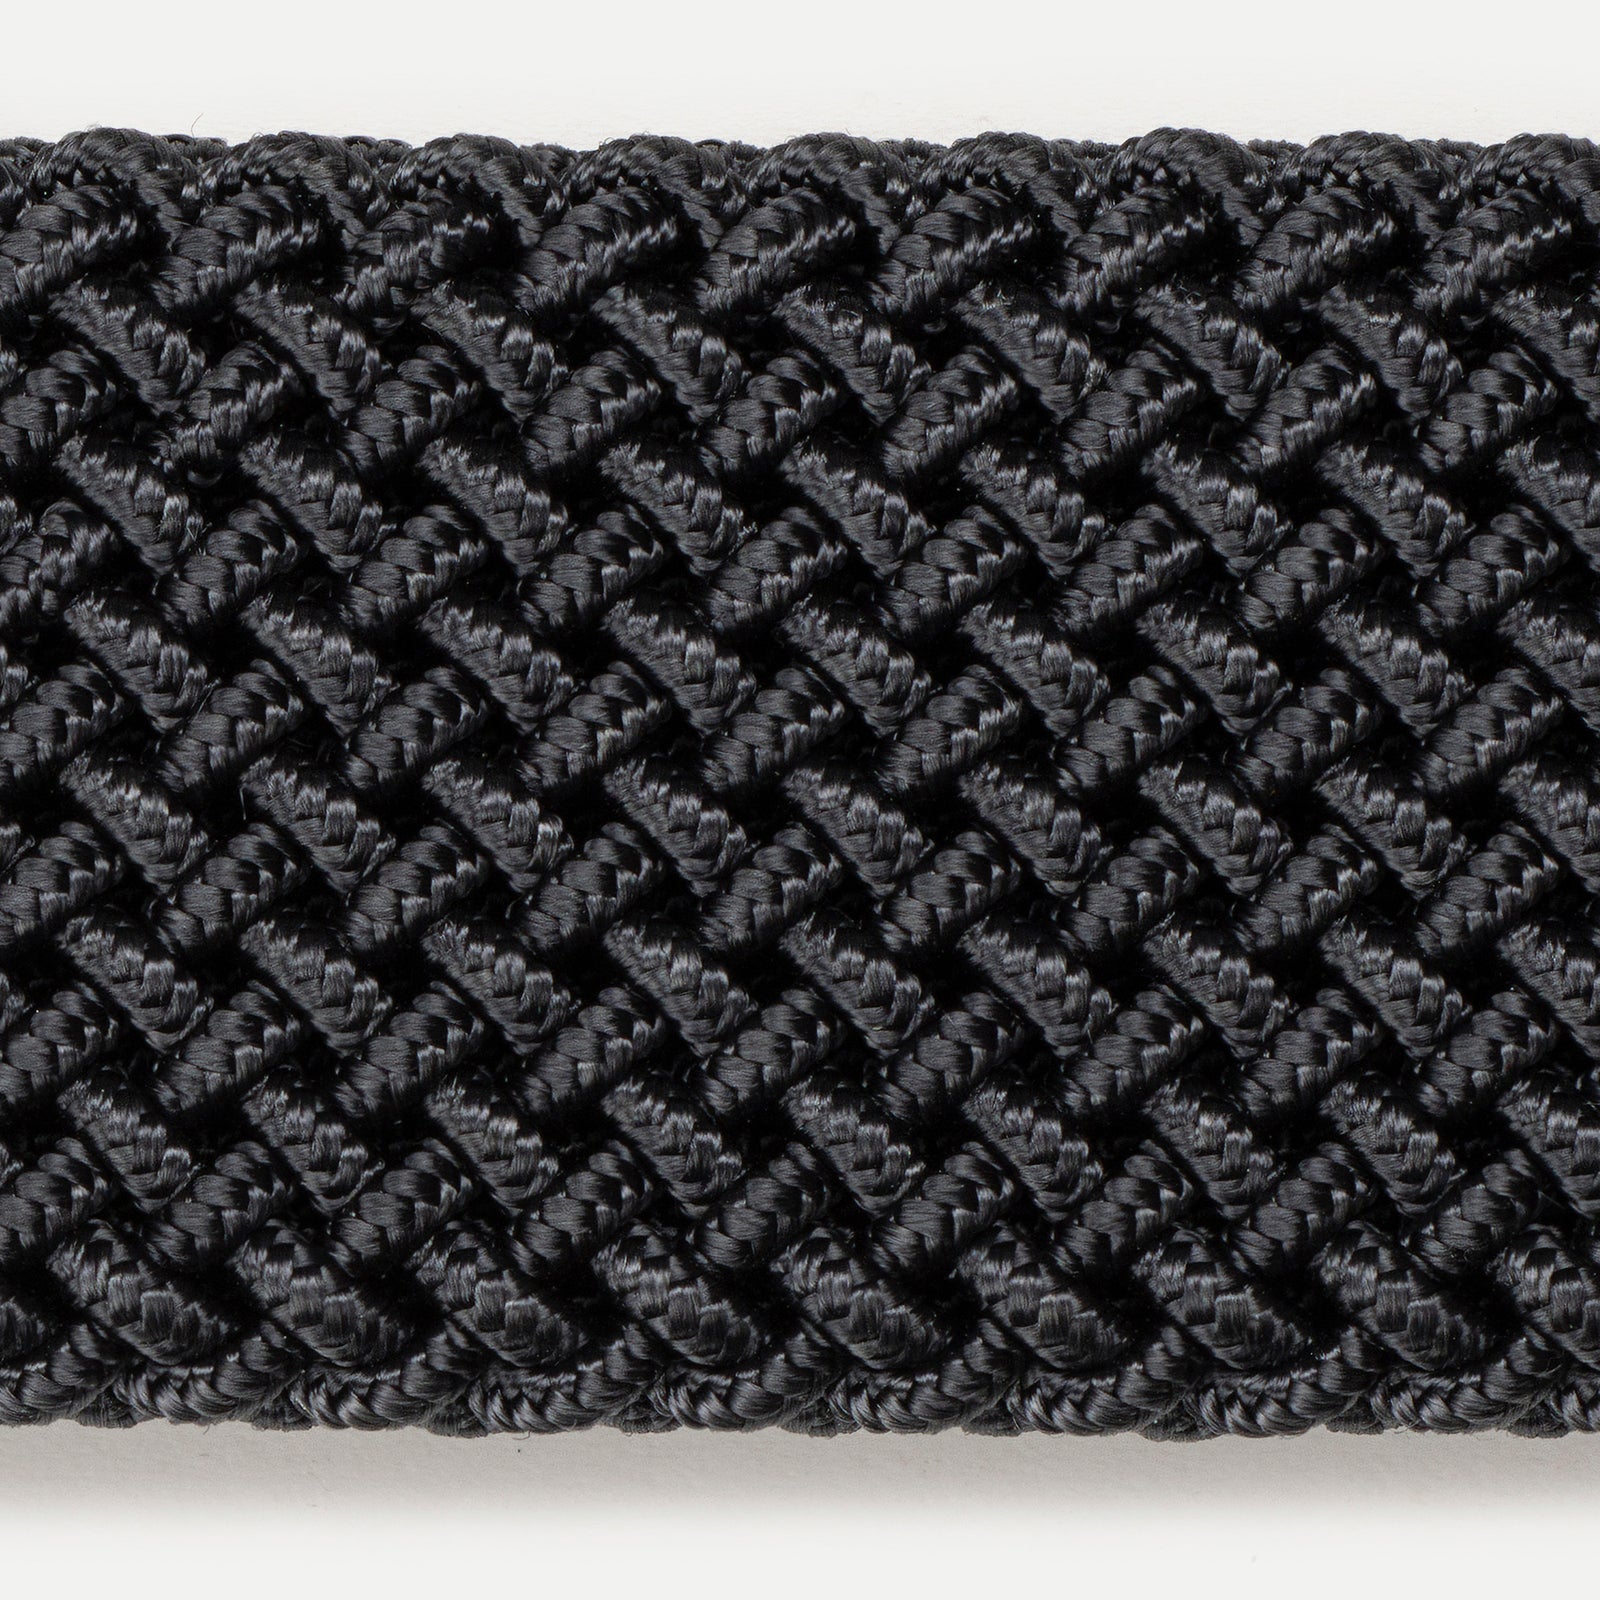 Belt 8/35 monocolor 100% Capri  dark grey leather belt detail